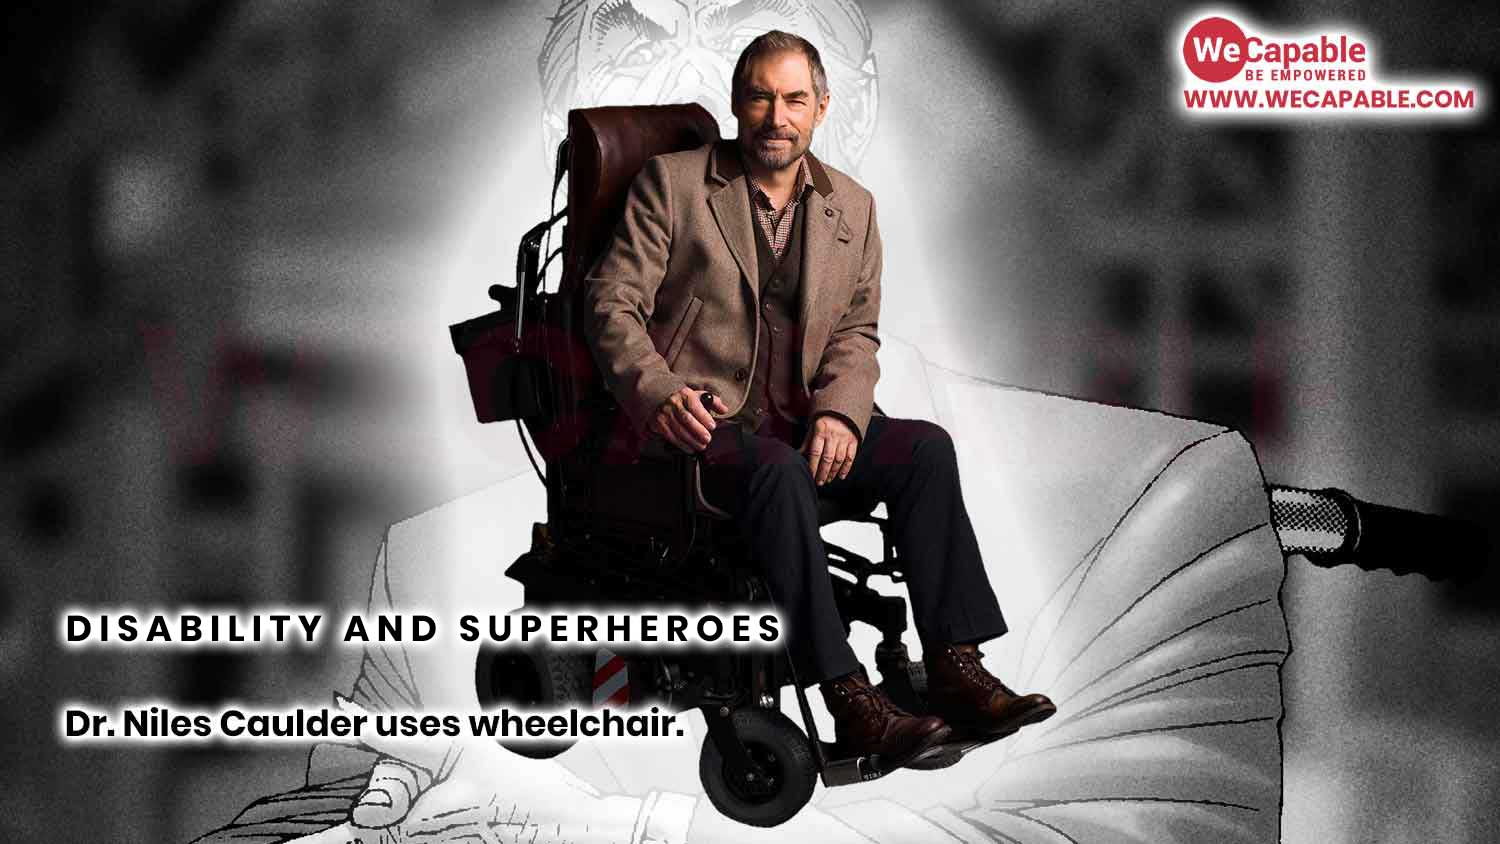 Superhero Dr. Niles Caulder aka Chief has a disability. He uses a wheelchair.